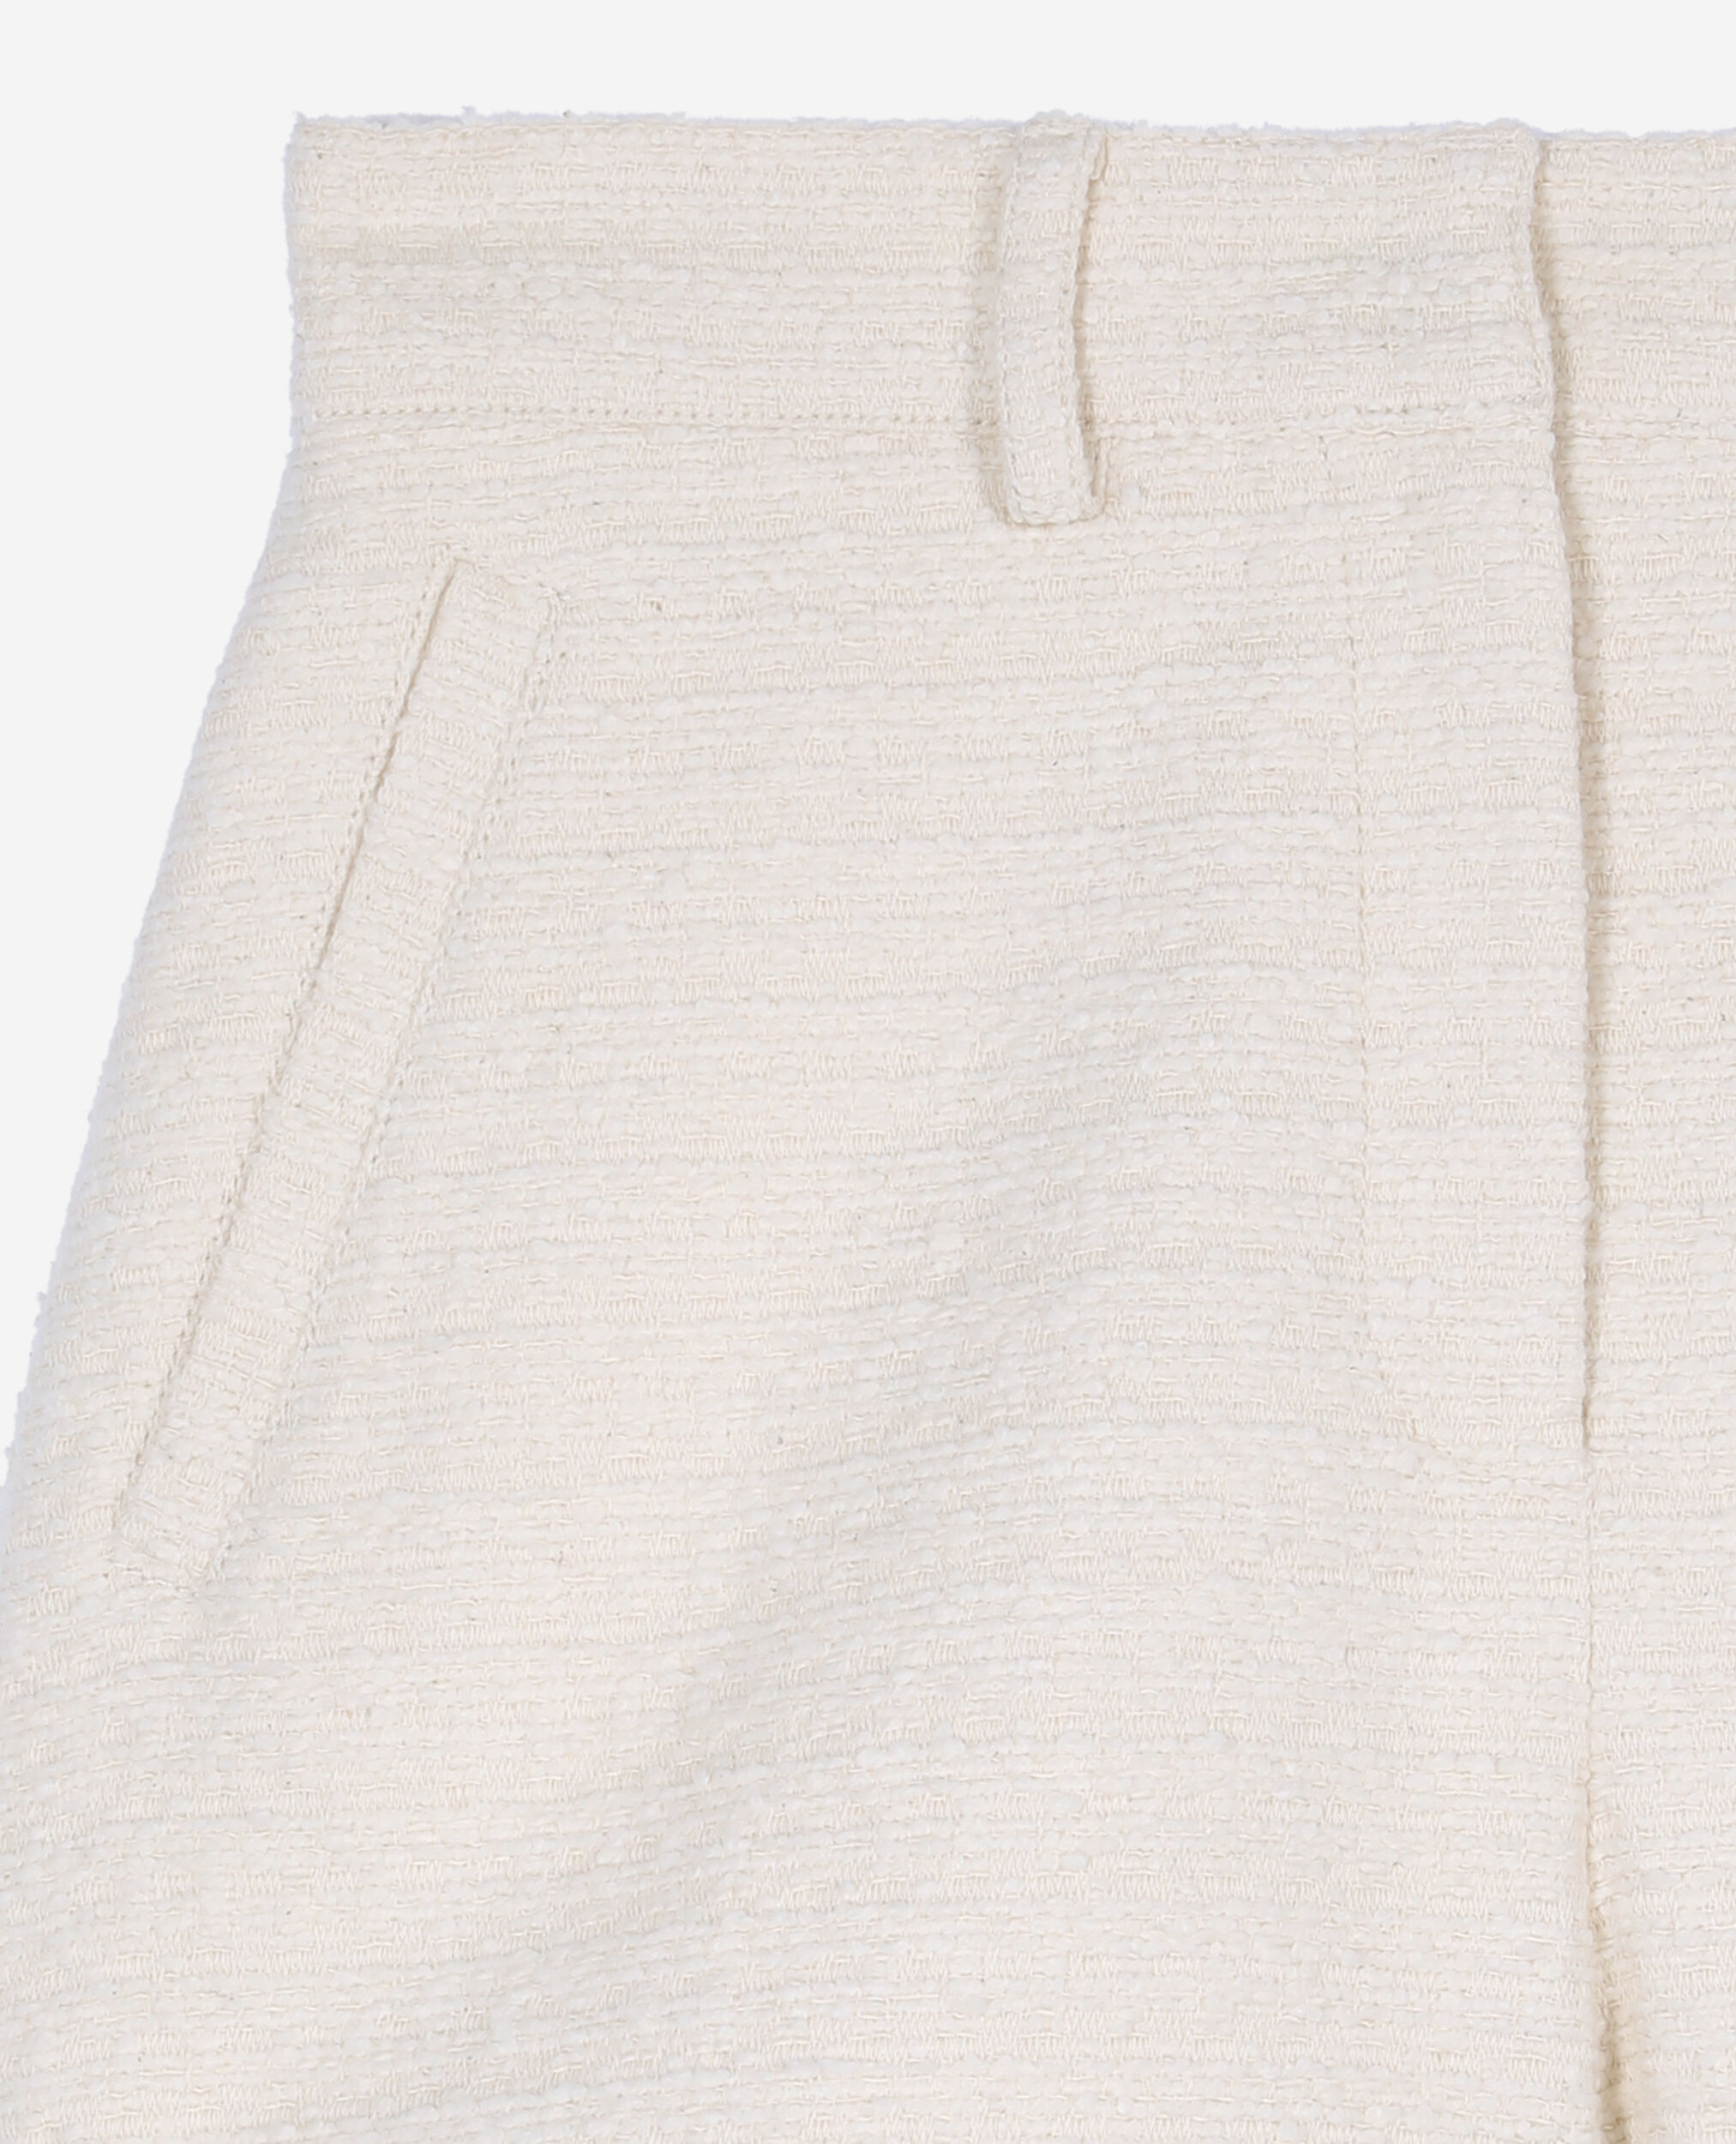 Pantalones cortos blanco crudo tweed, ECRU, hi-res image number null